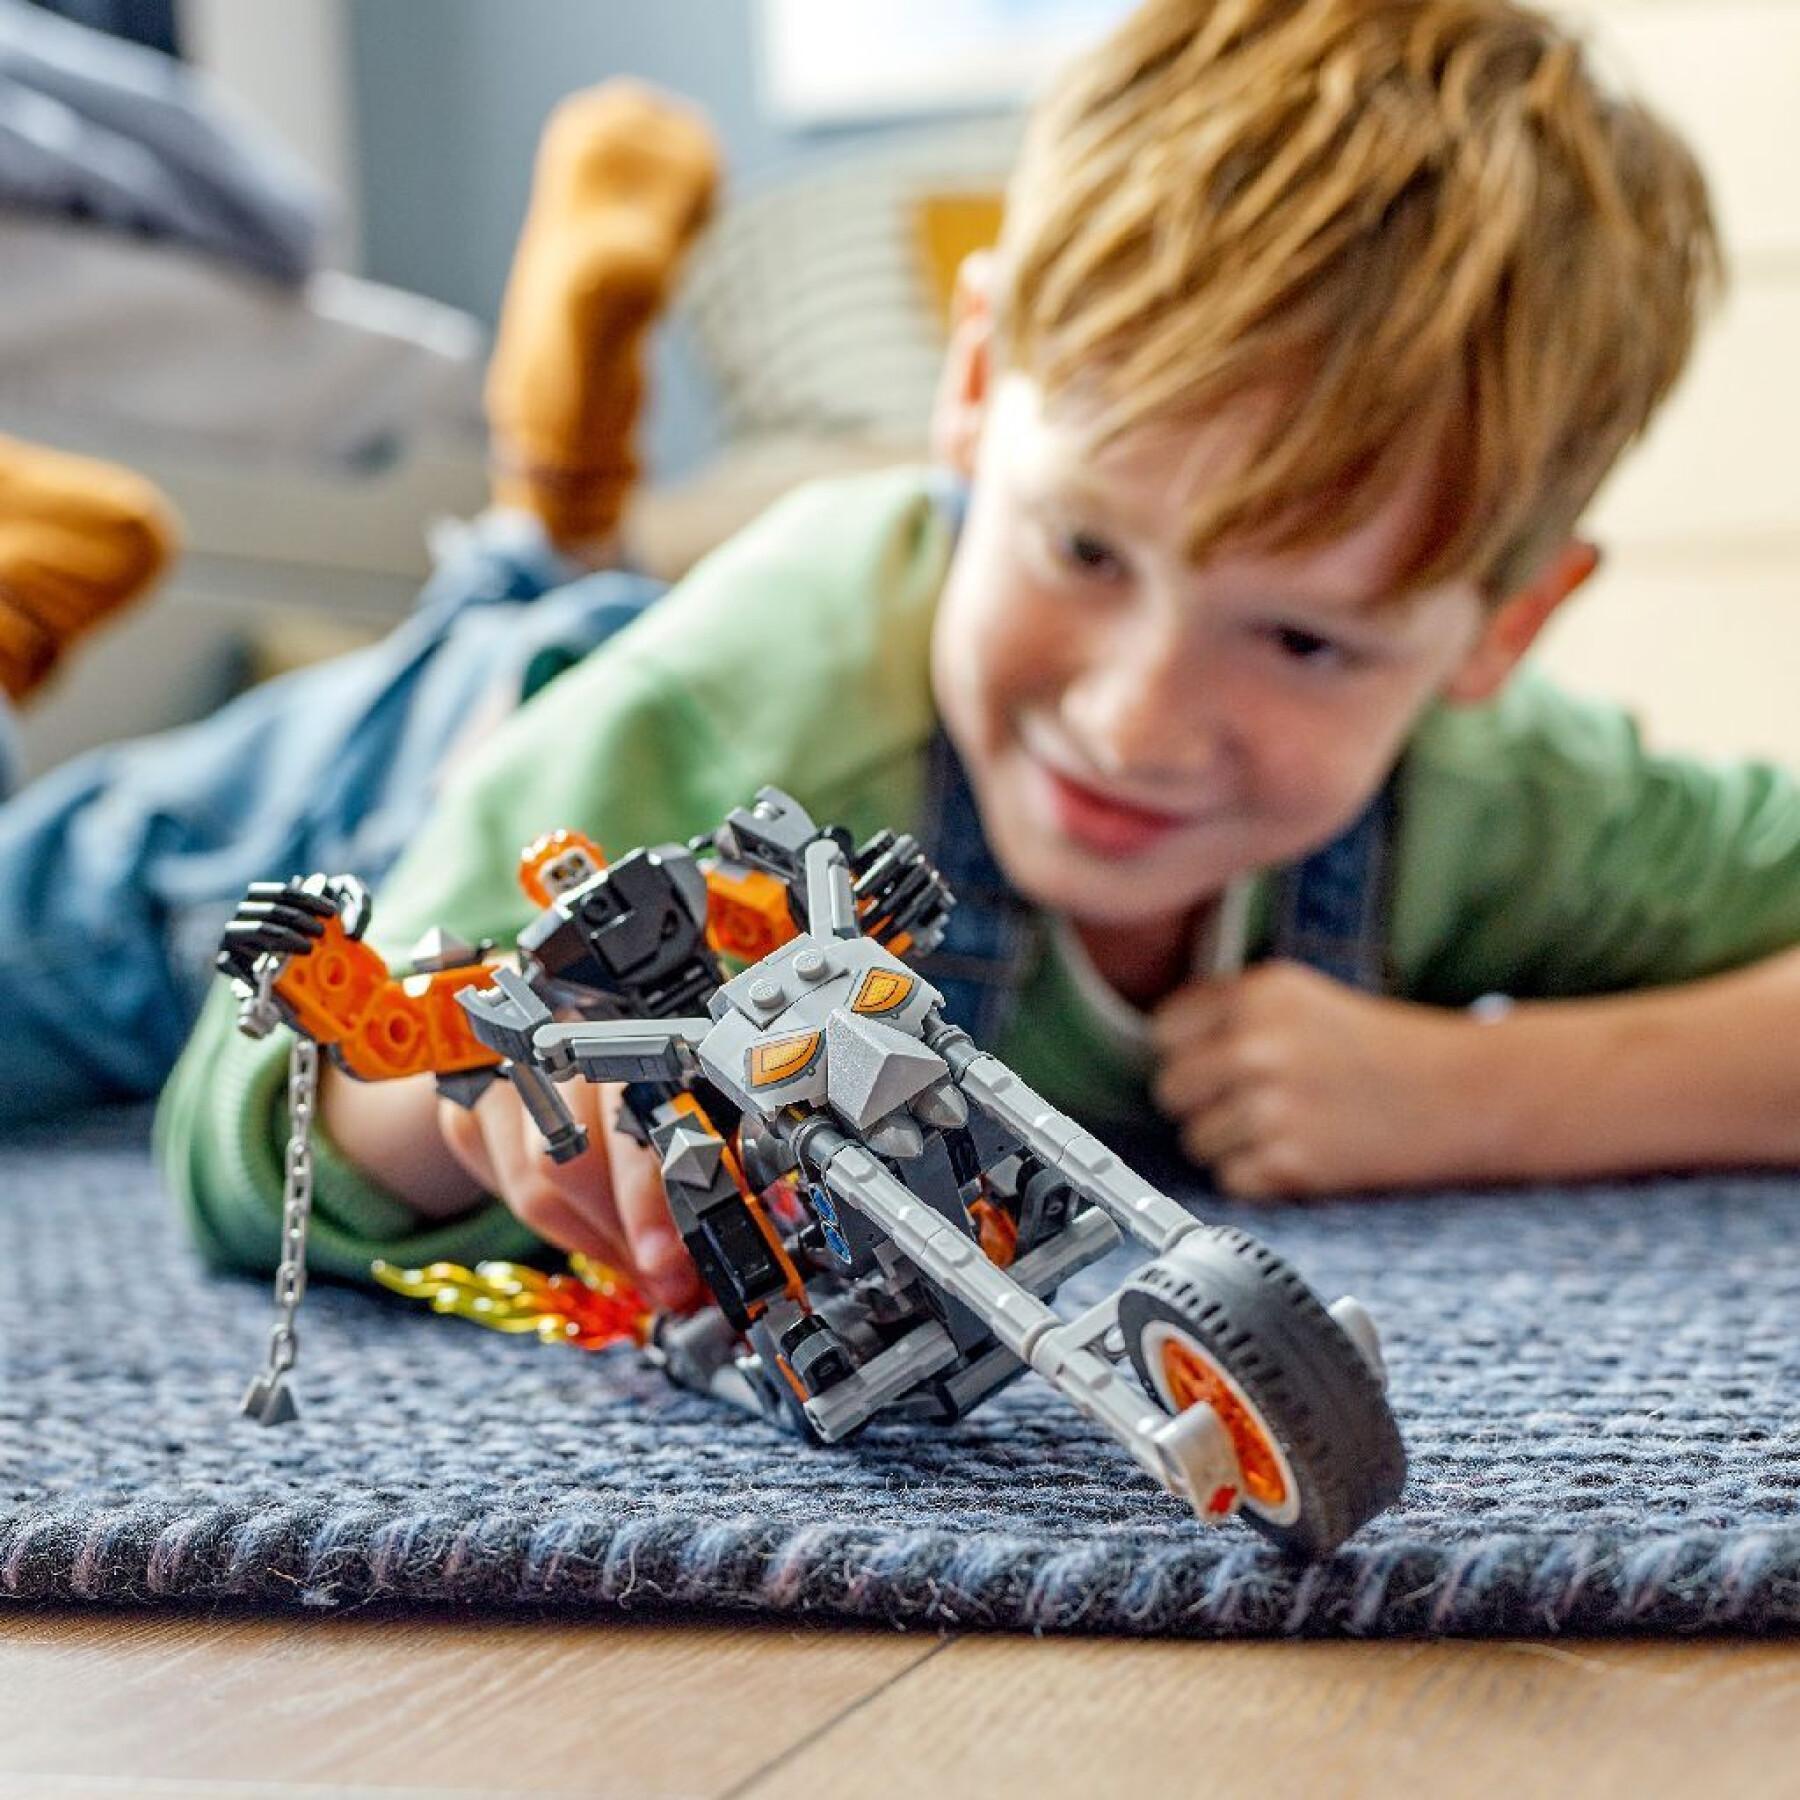 Jeux de construction Robot +moto Ghost Rider Lego Marvel